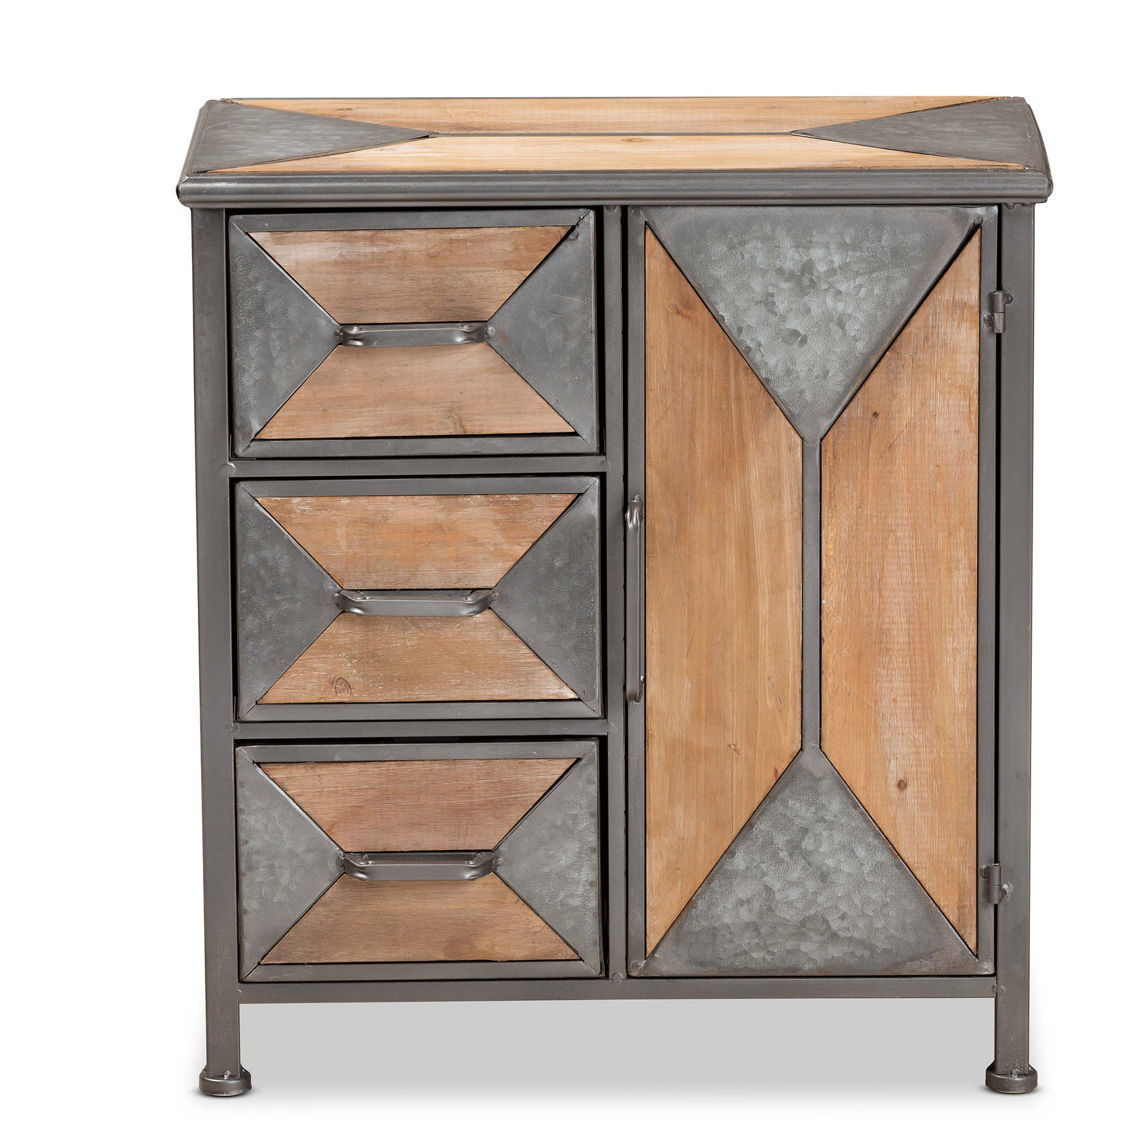 Baxton Studio Laurel Antique Grey Metal and Whitewashed Oak Wood Storage Cabinet - Image 3 of 5